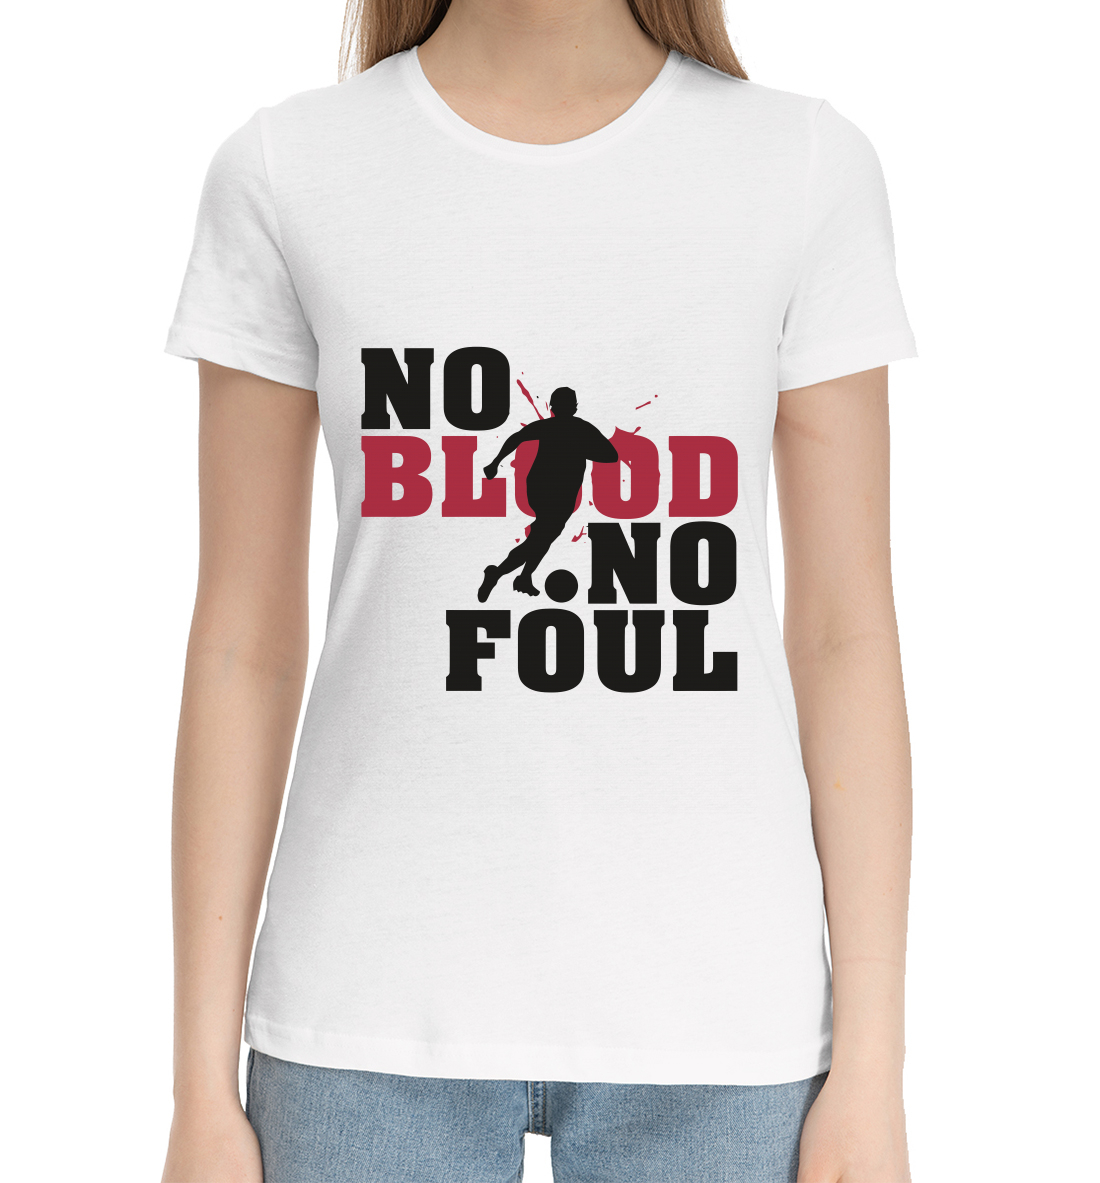 Женская Хлопковая футболка Нет крови - нет фола, артикул FTO-788234-hfu-1mp